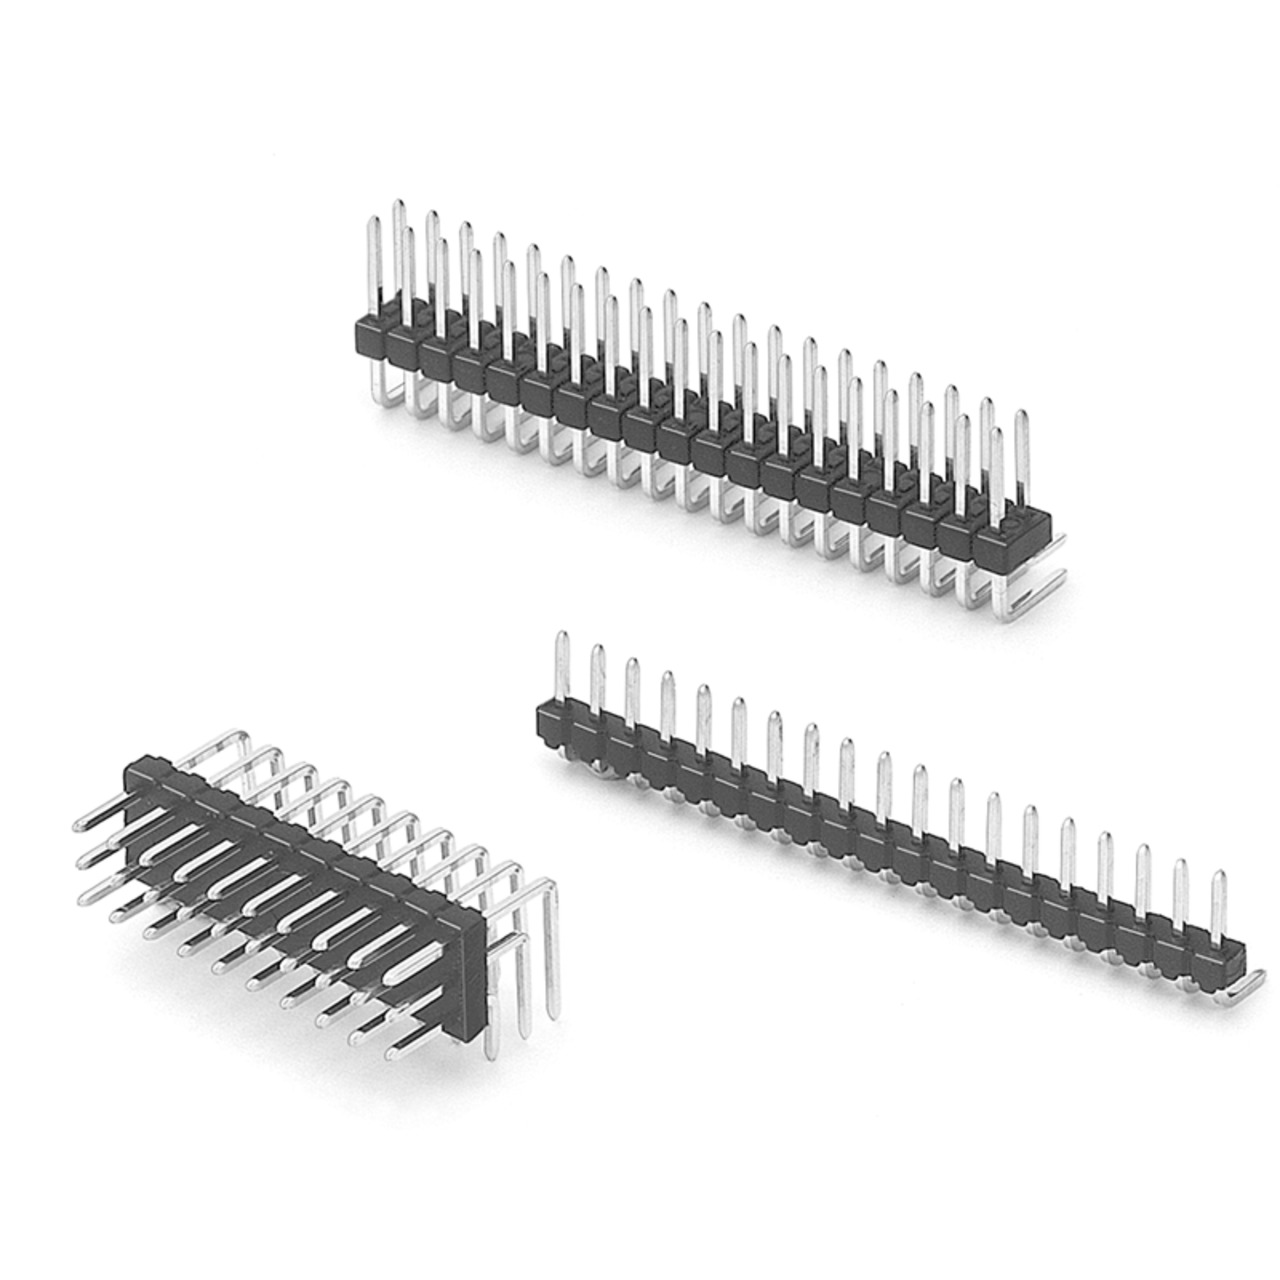 Stiftleiste- 2x 40-polig- abgewinkelt-  RM 2-54 mm unter Komponenten